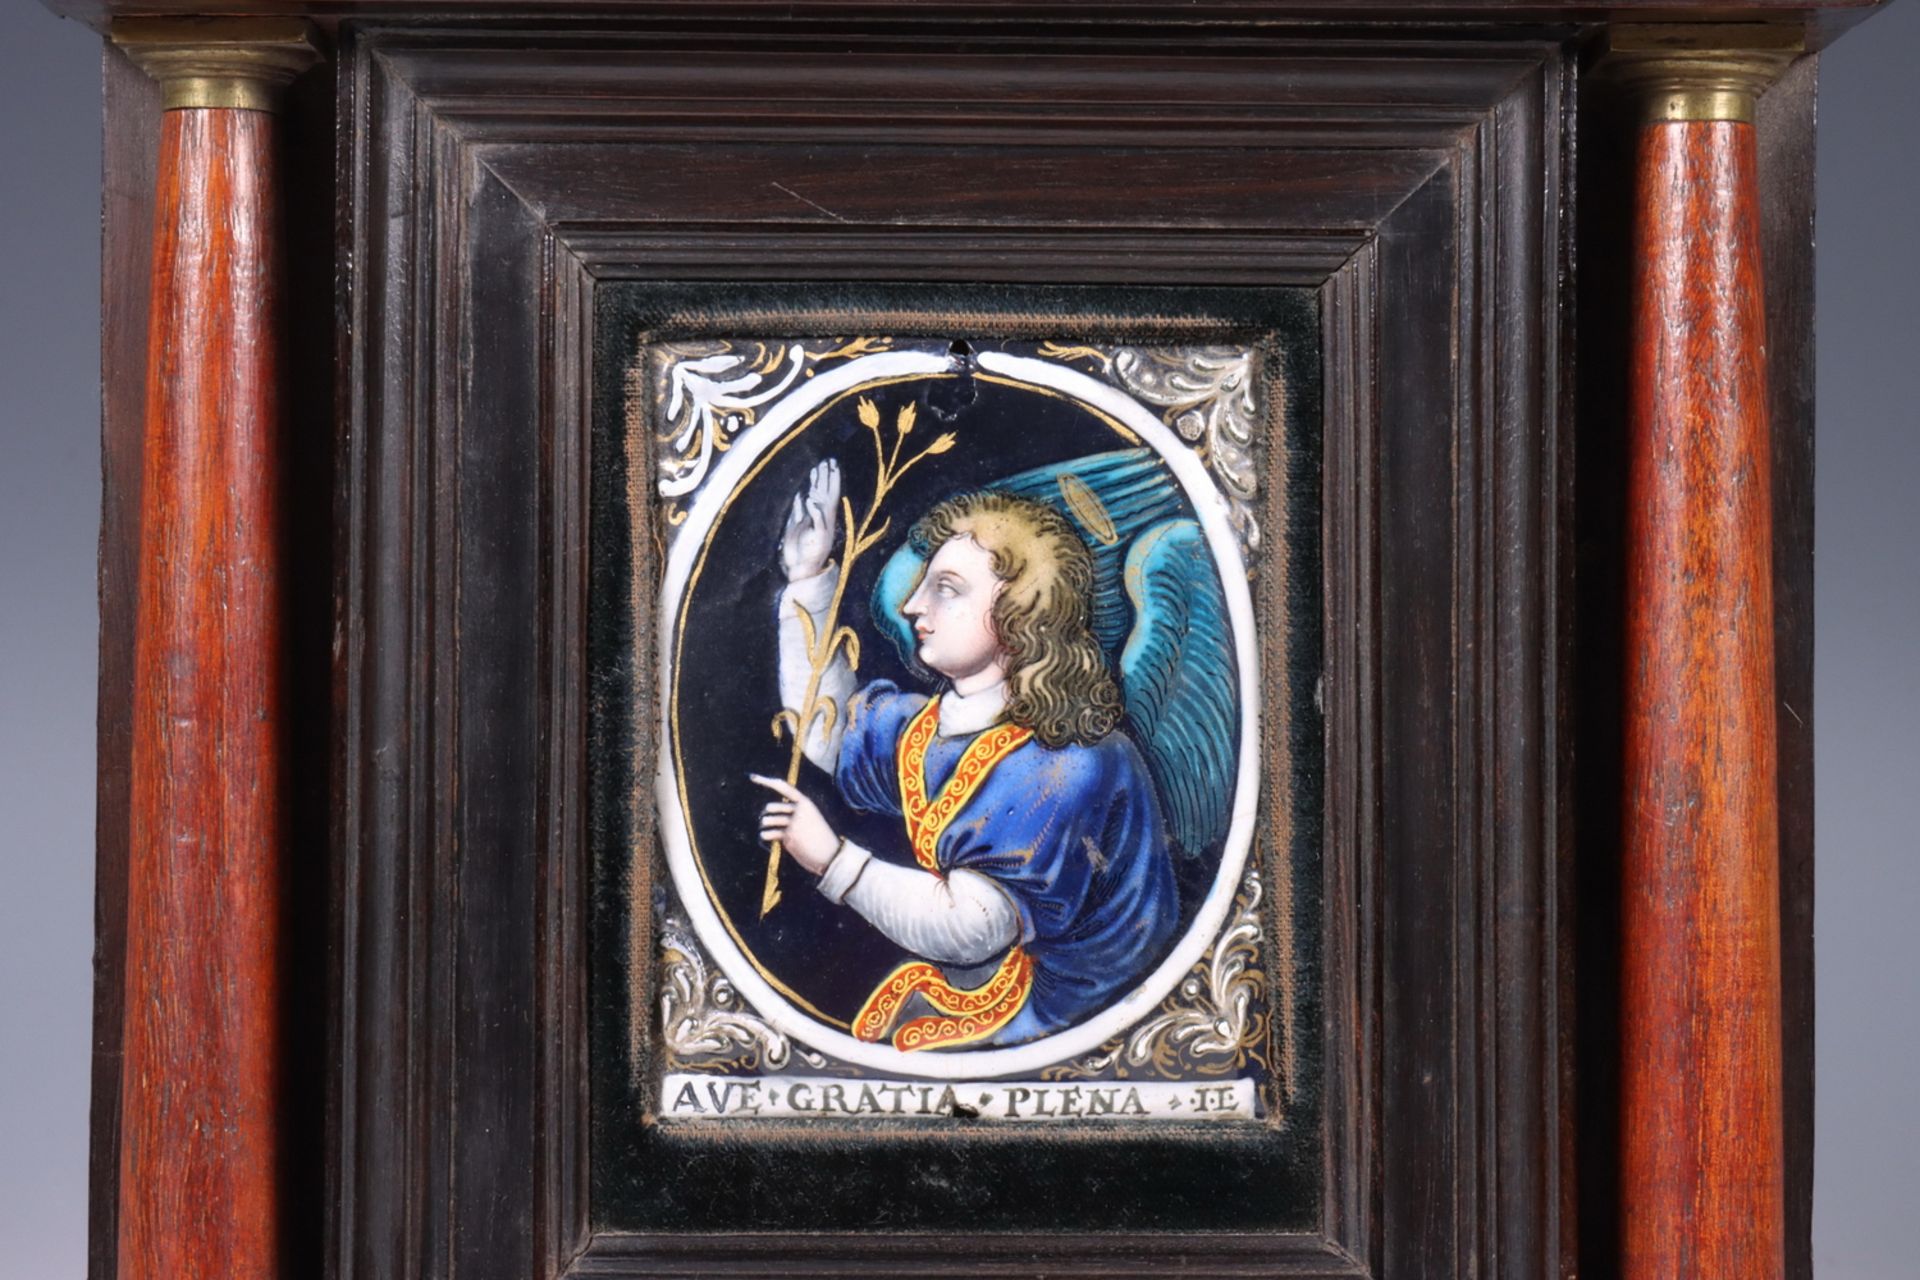 Limoges, emaille plaquette 'Ave Gratia Plena Il', Laudin, ca. 1700, - Image 2 of 3